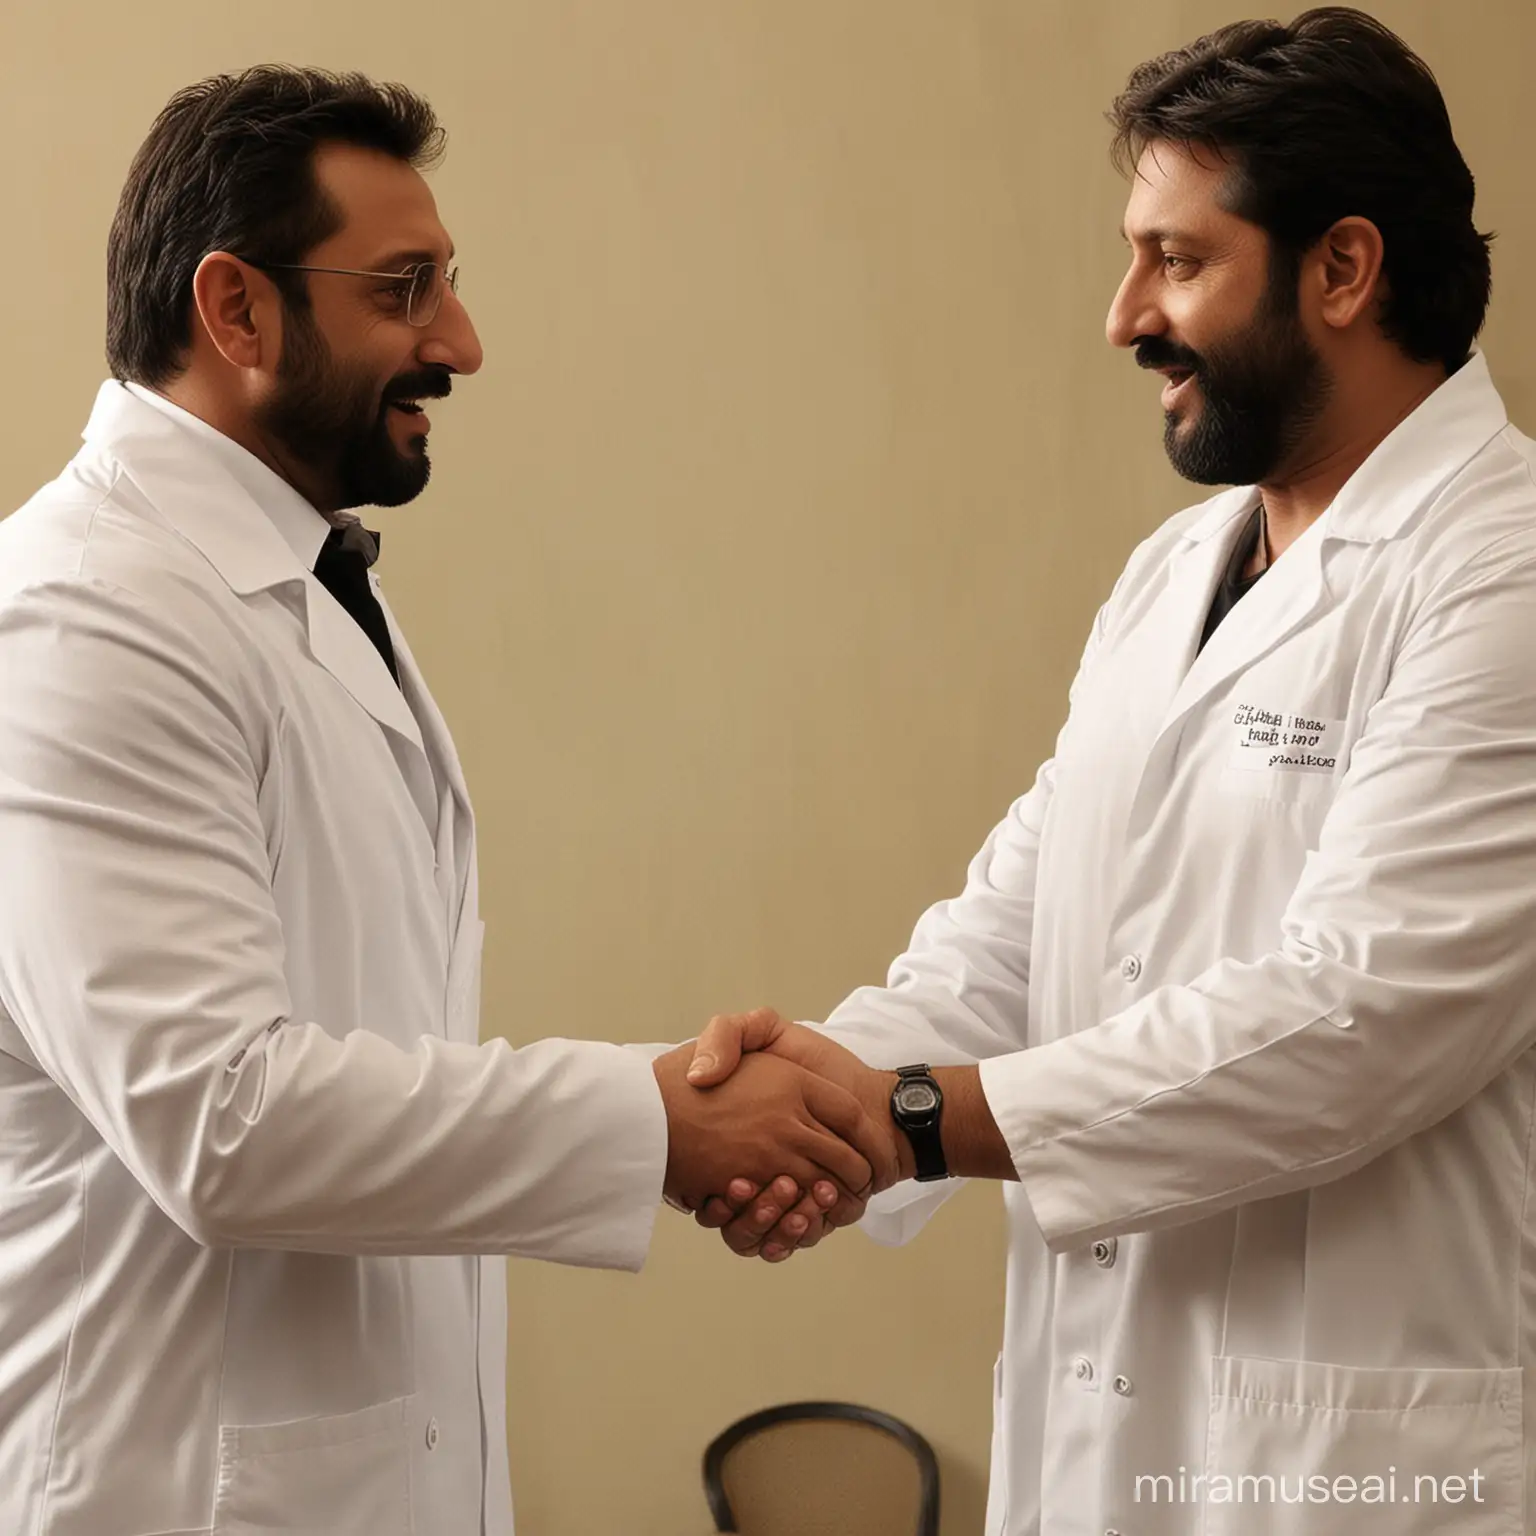 Sanjay Dutt & arshad warsi  wearing Doctor coat & shaking hands
